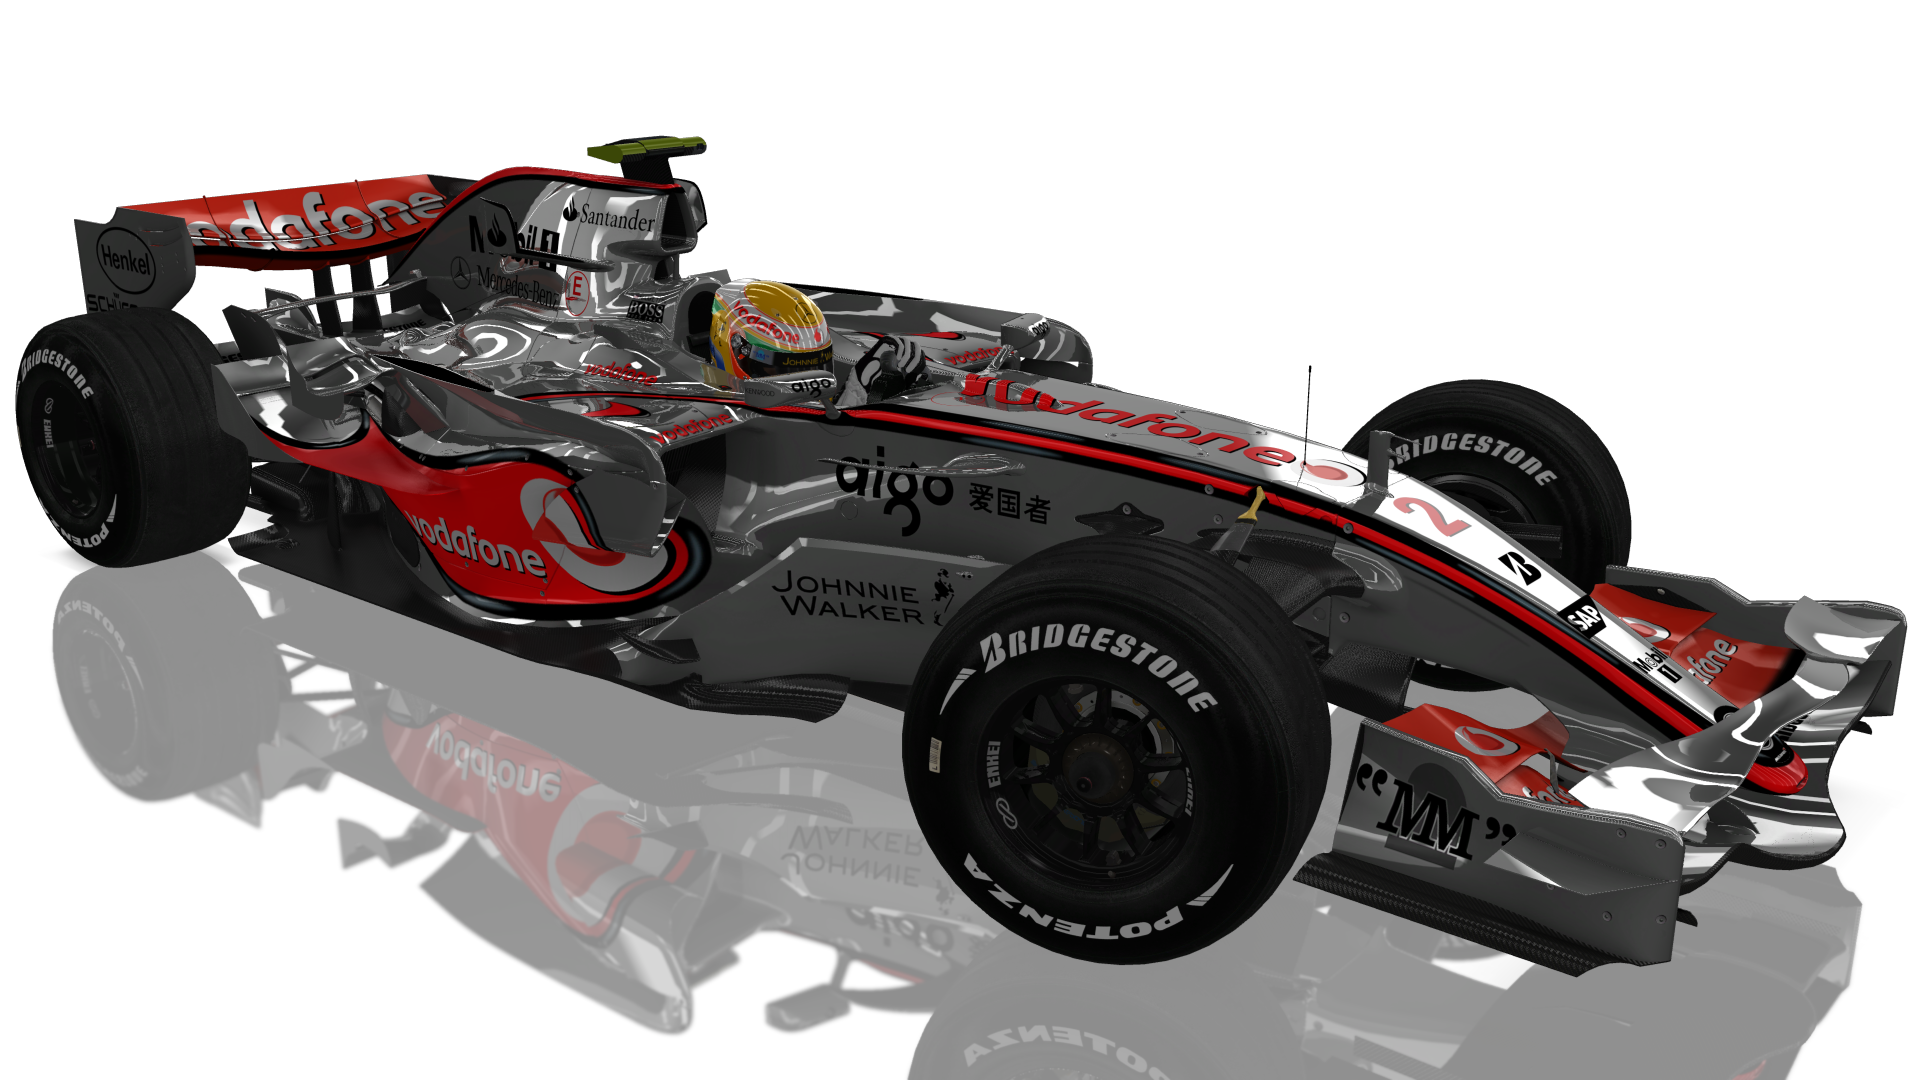 General 1920x1080 Formula 1 Lewis Hamilton black background race cars Assetto Corsa digital art